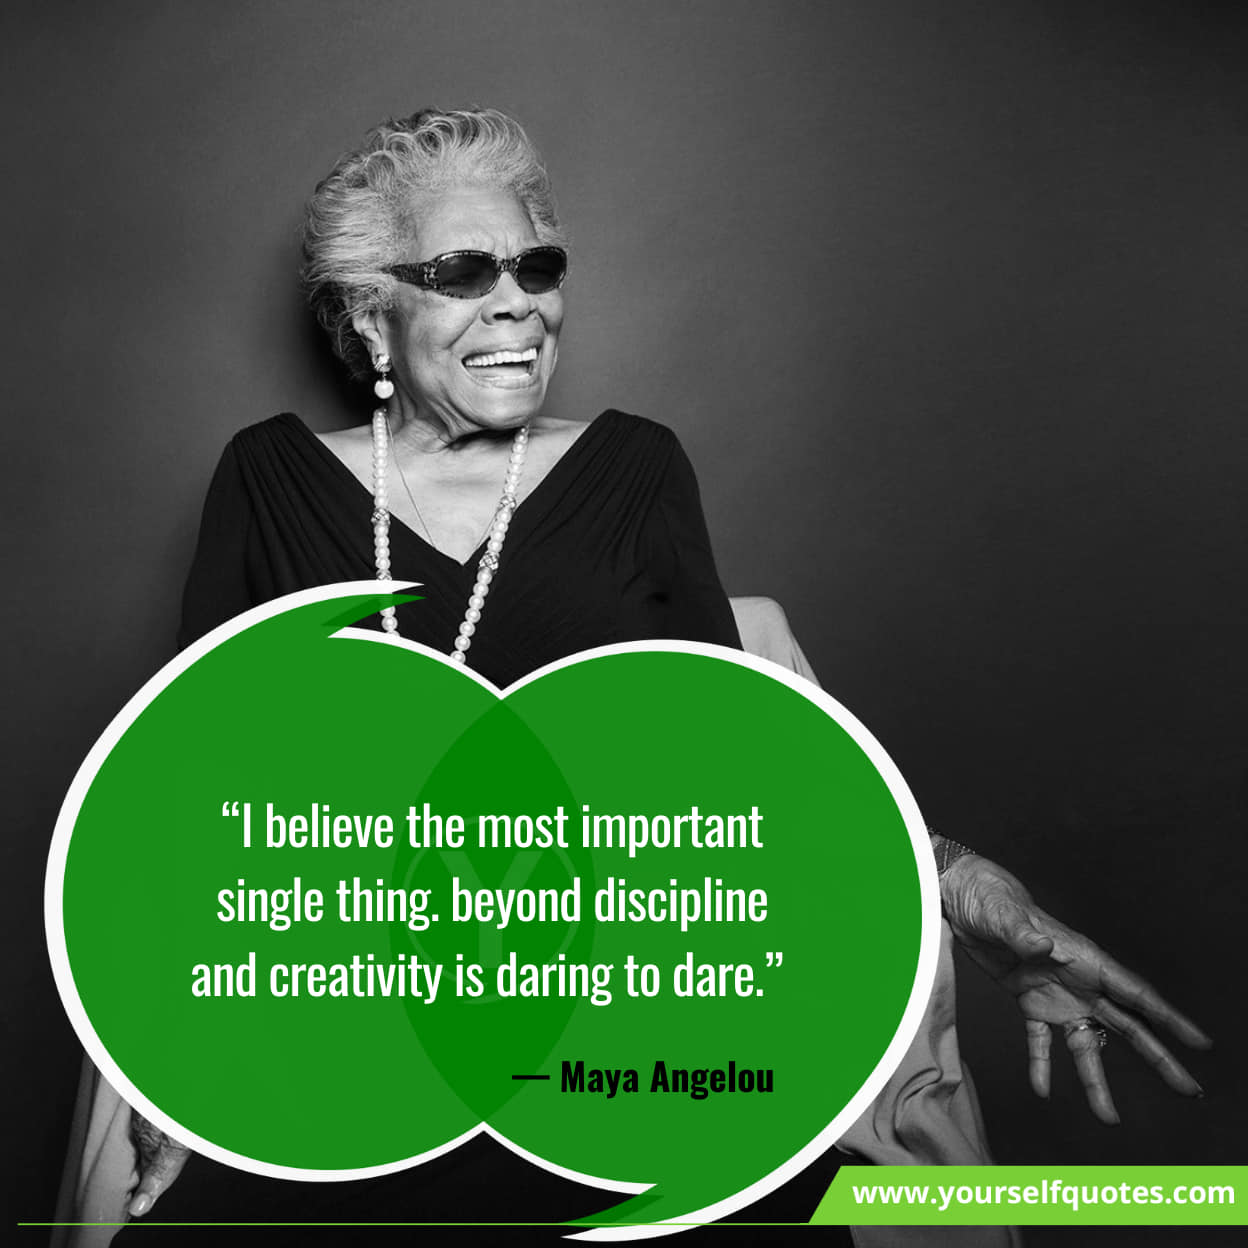 Maya Angelou quotes on courage